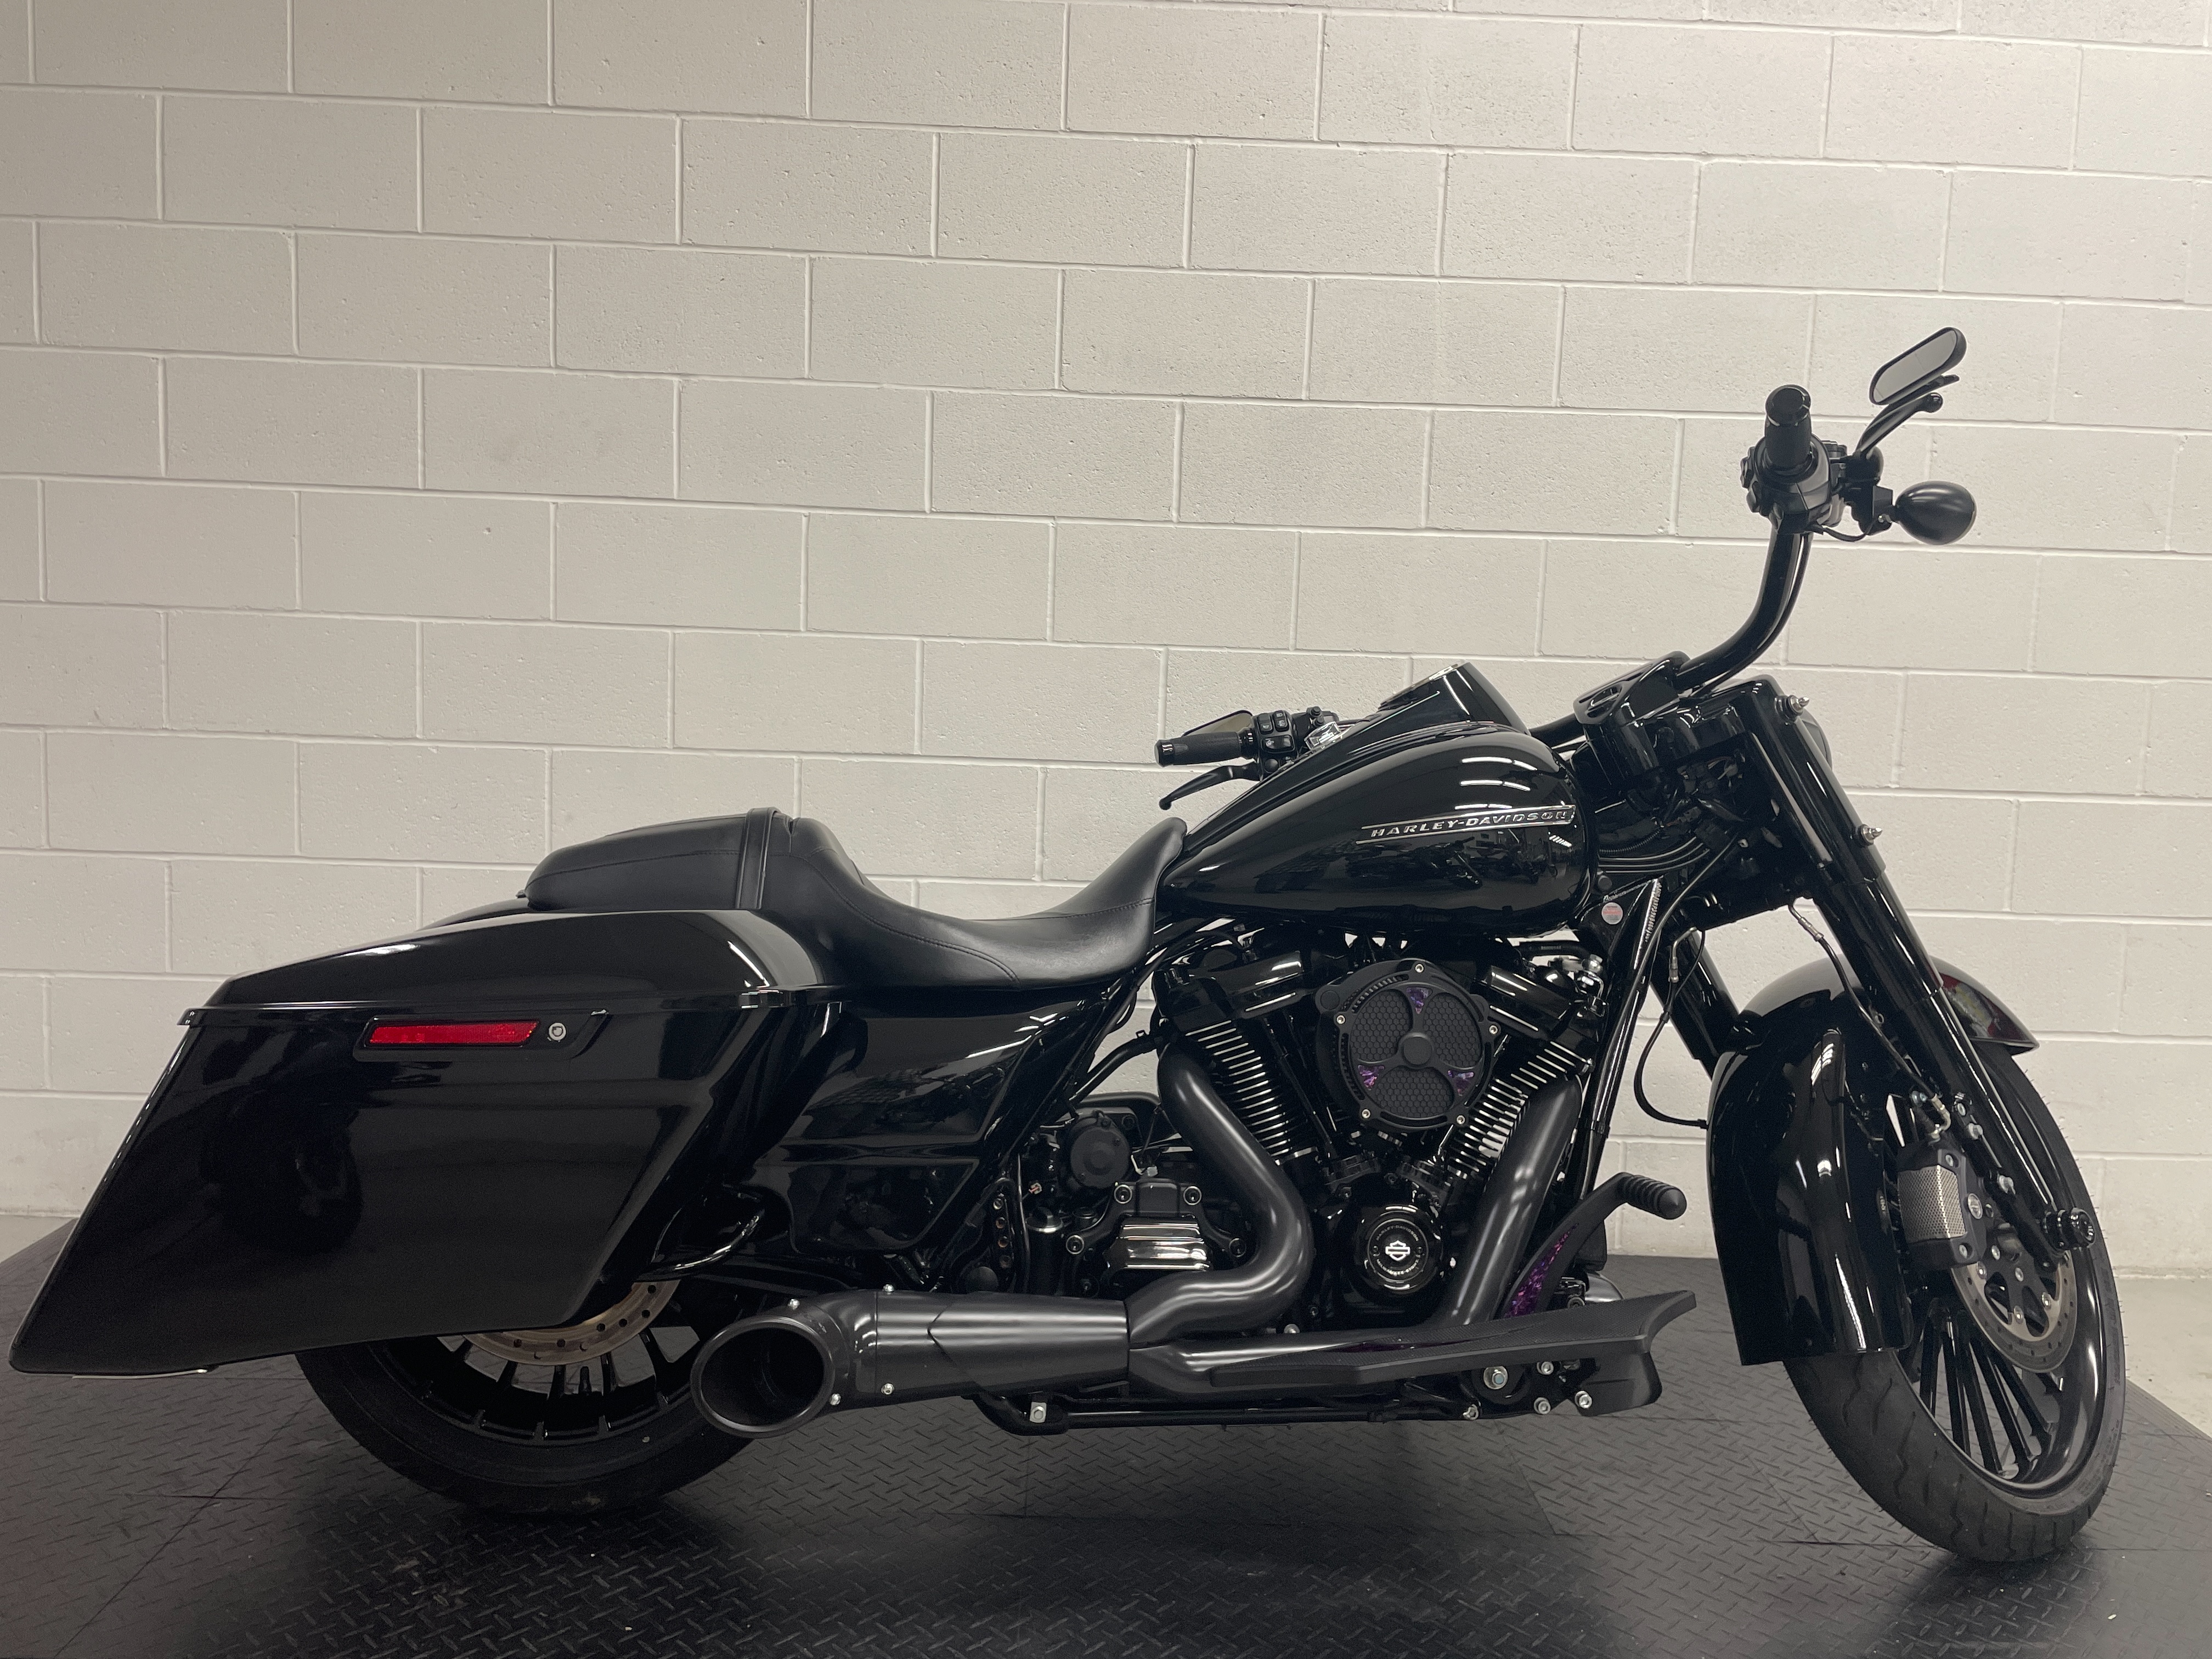 2019 Harley-Davidson Road King Special at Destination Harley-Davidson®, Silverdale, WA 98383